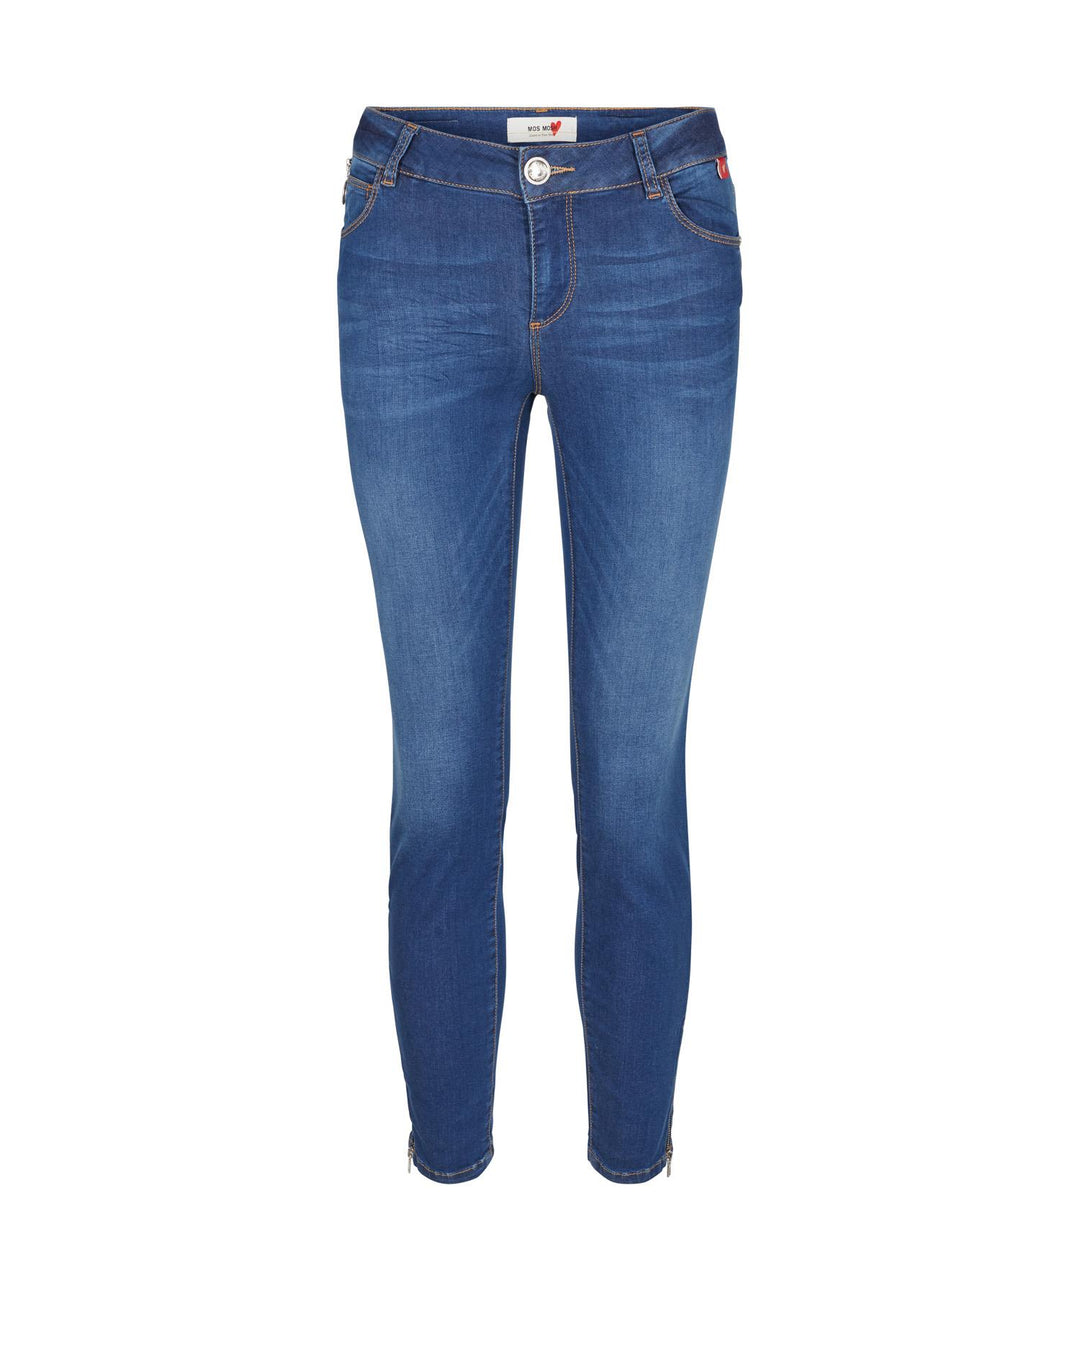 Victoria Sateen Jeans